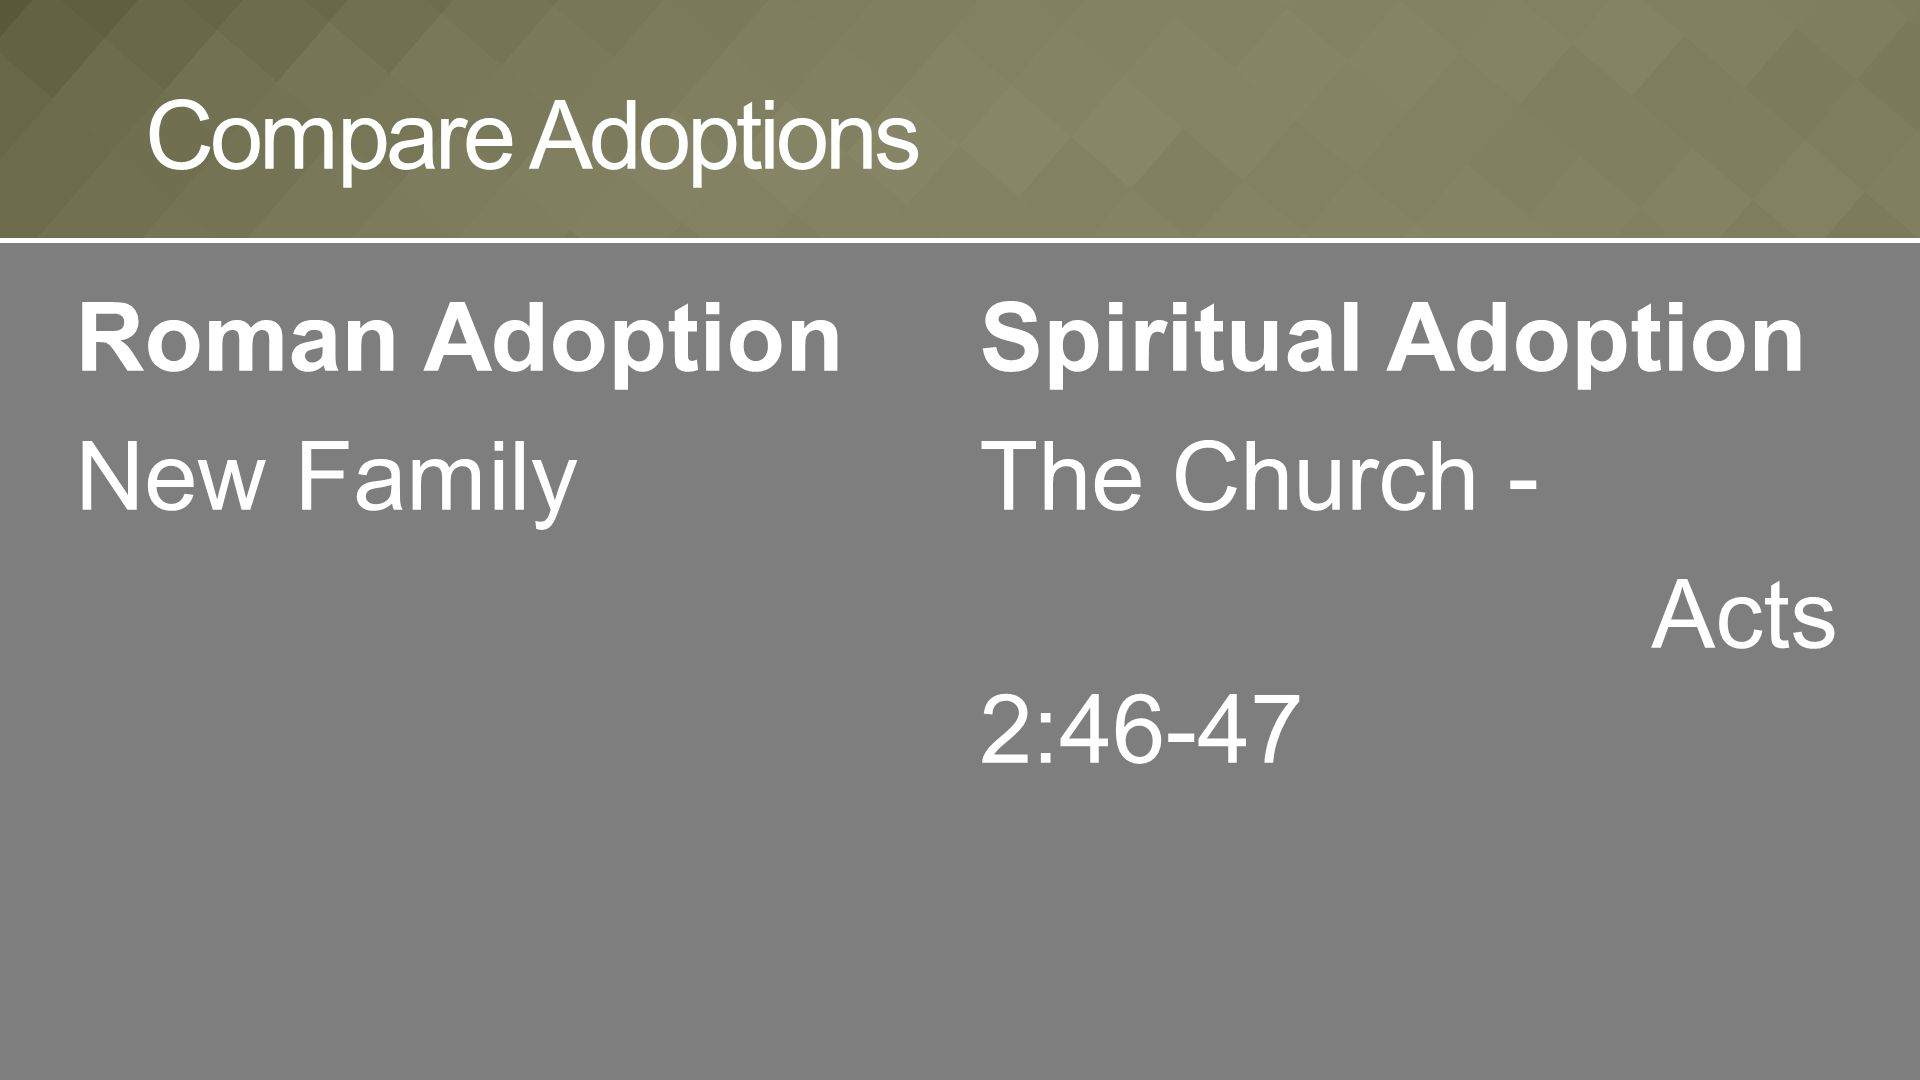 Roman Adoption New Family Compare Adoptions Spiritual Adoption The Church - Acts 2:46-47